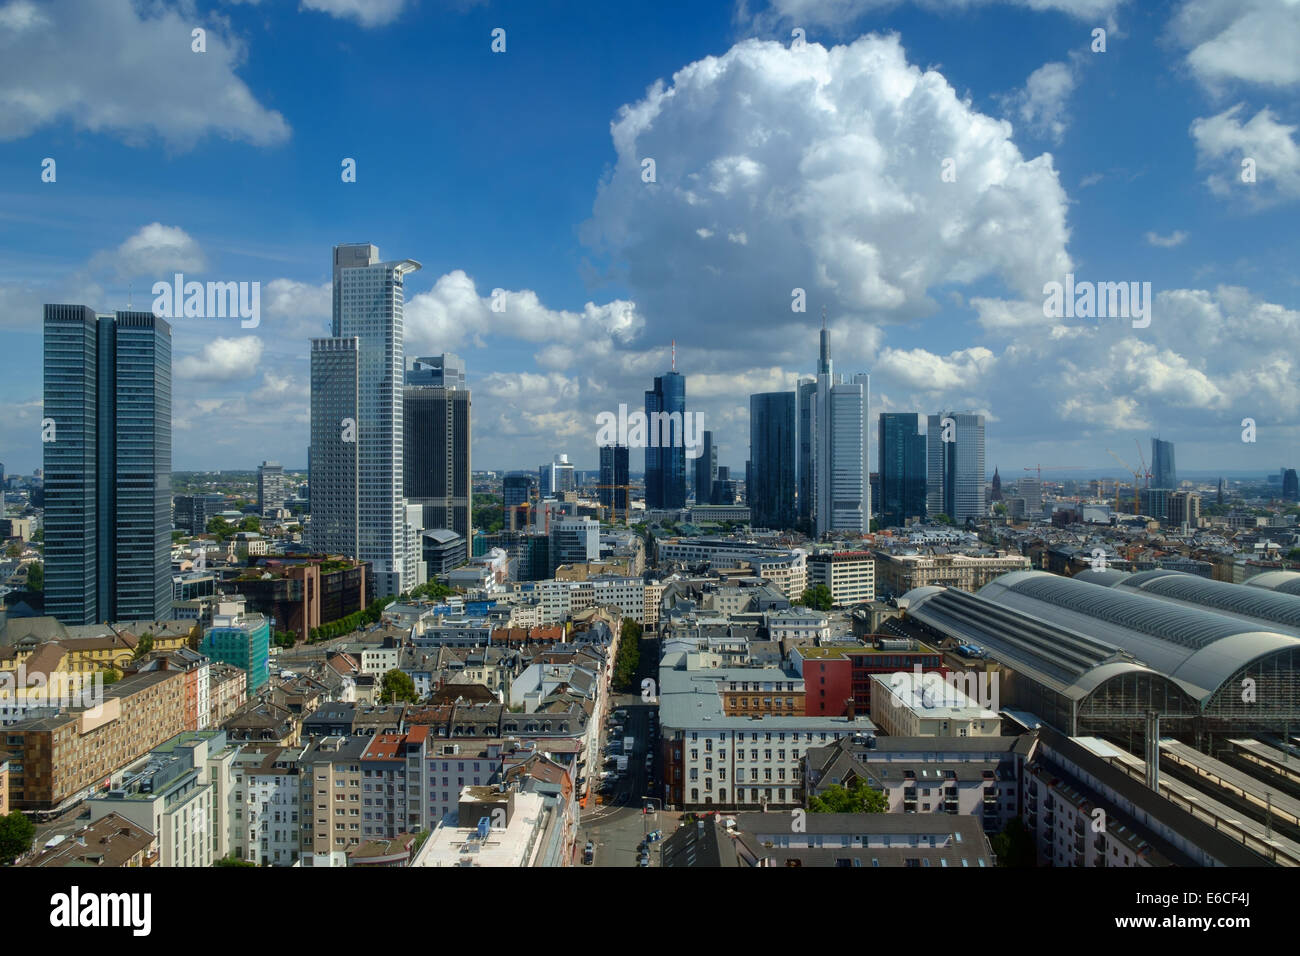 Skyline of Frankfurt under a partly cloudy sky, Germany Stock Photo